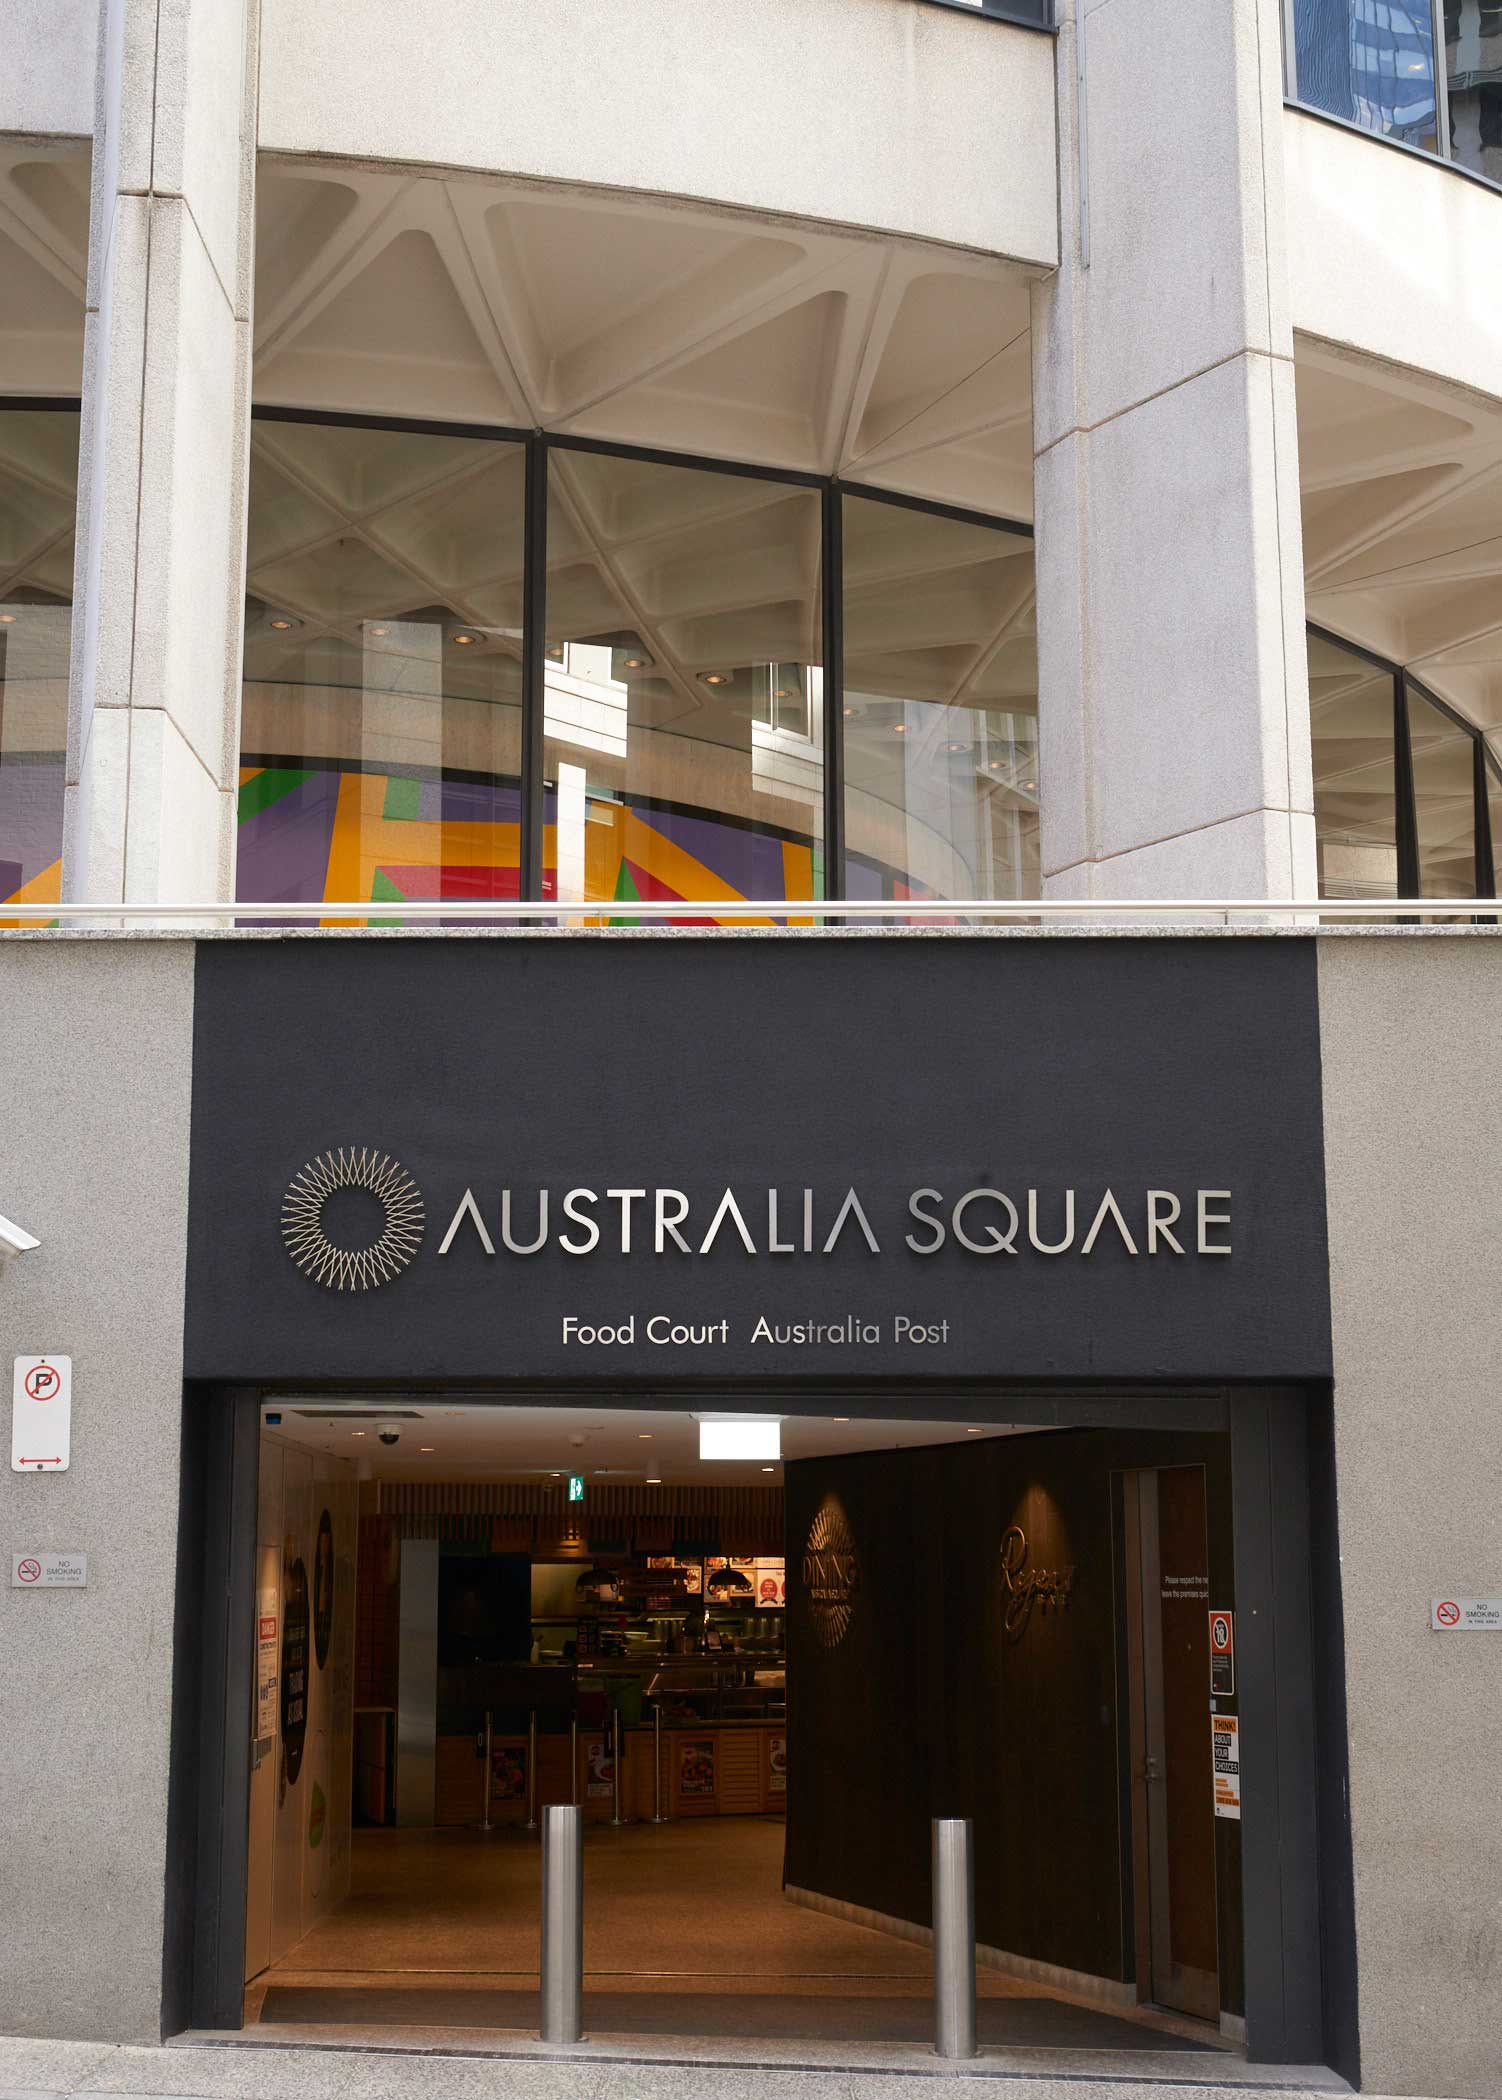 This Is Ikon - Australia Square